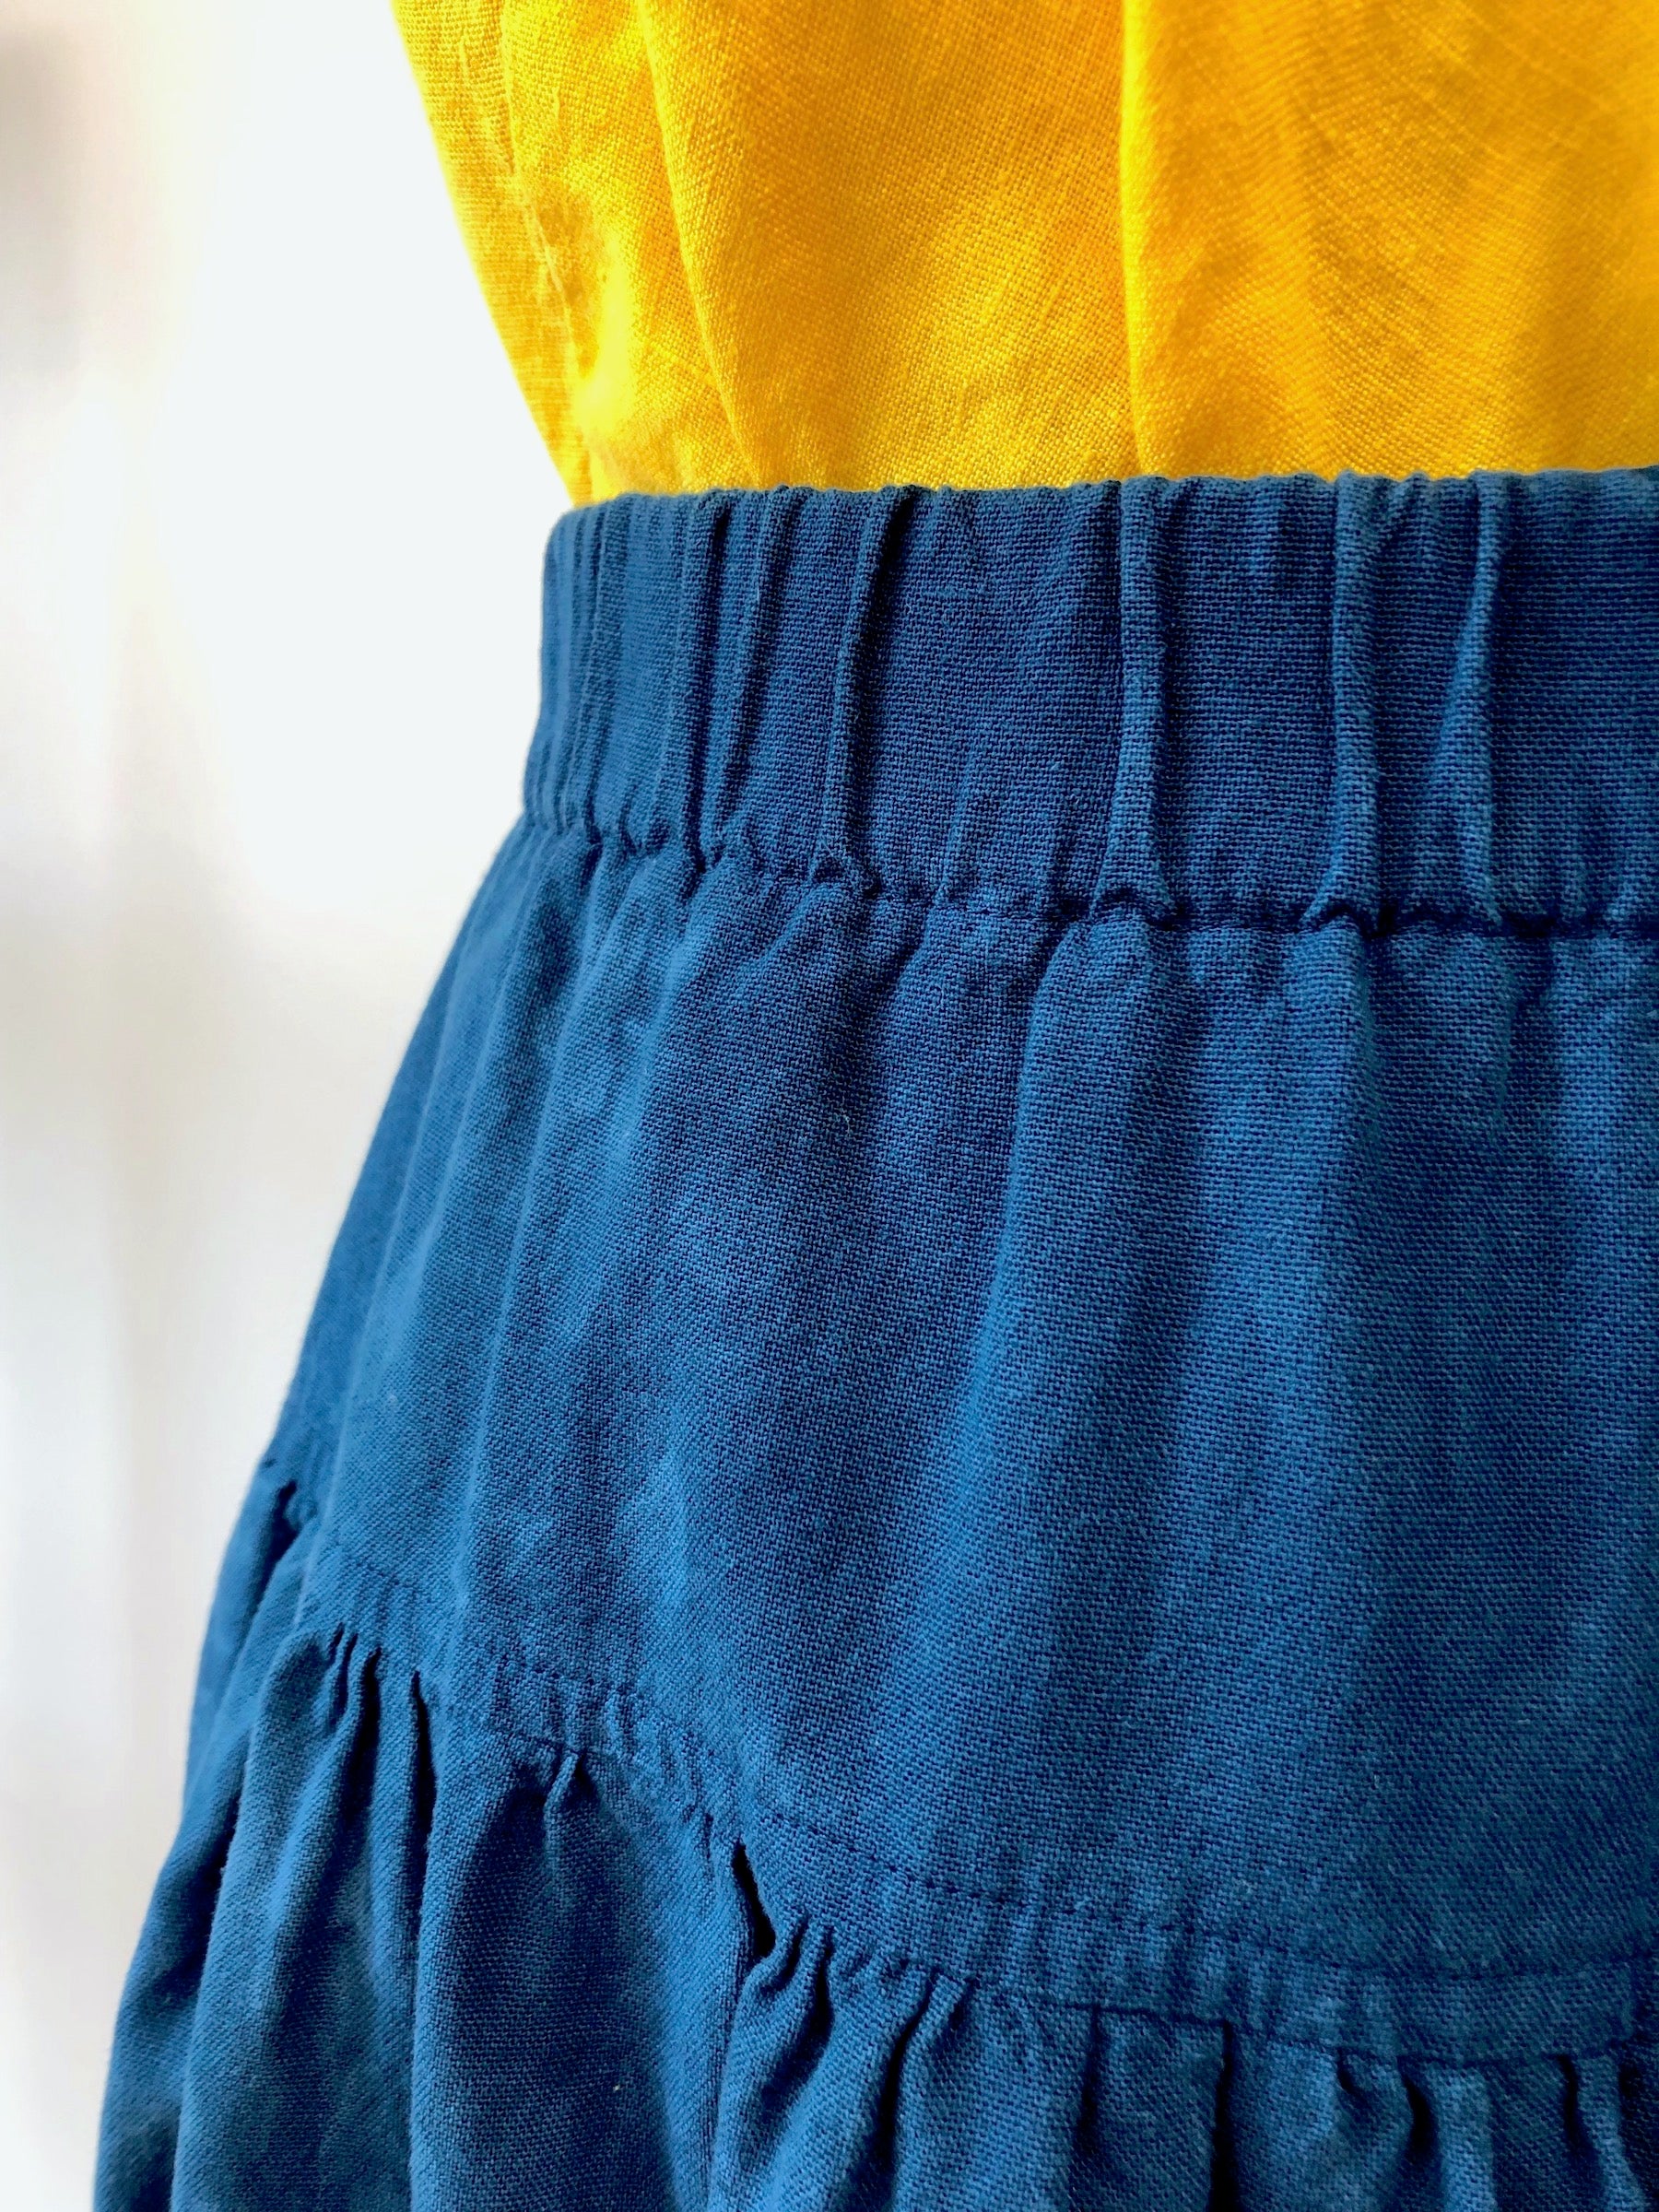 IONA Clothing Petticoat Skirt